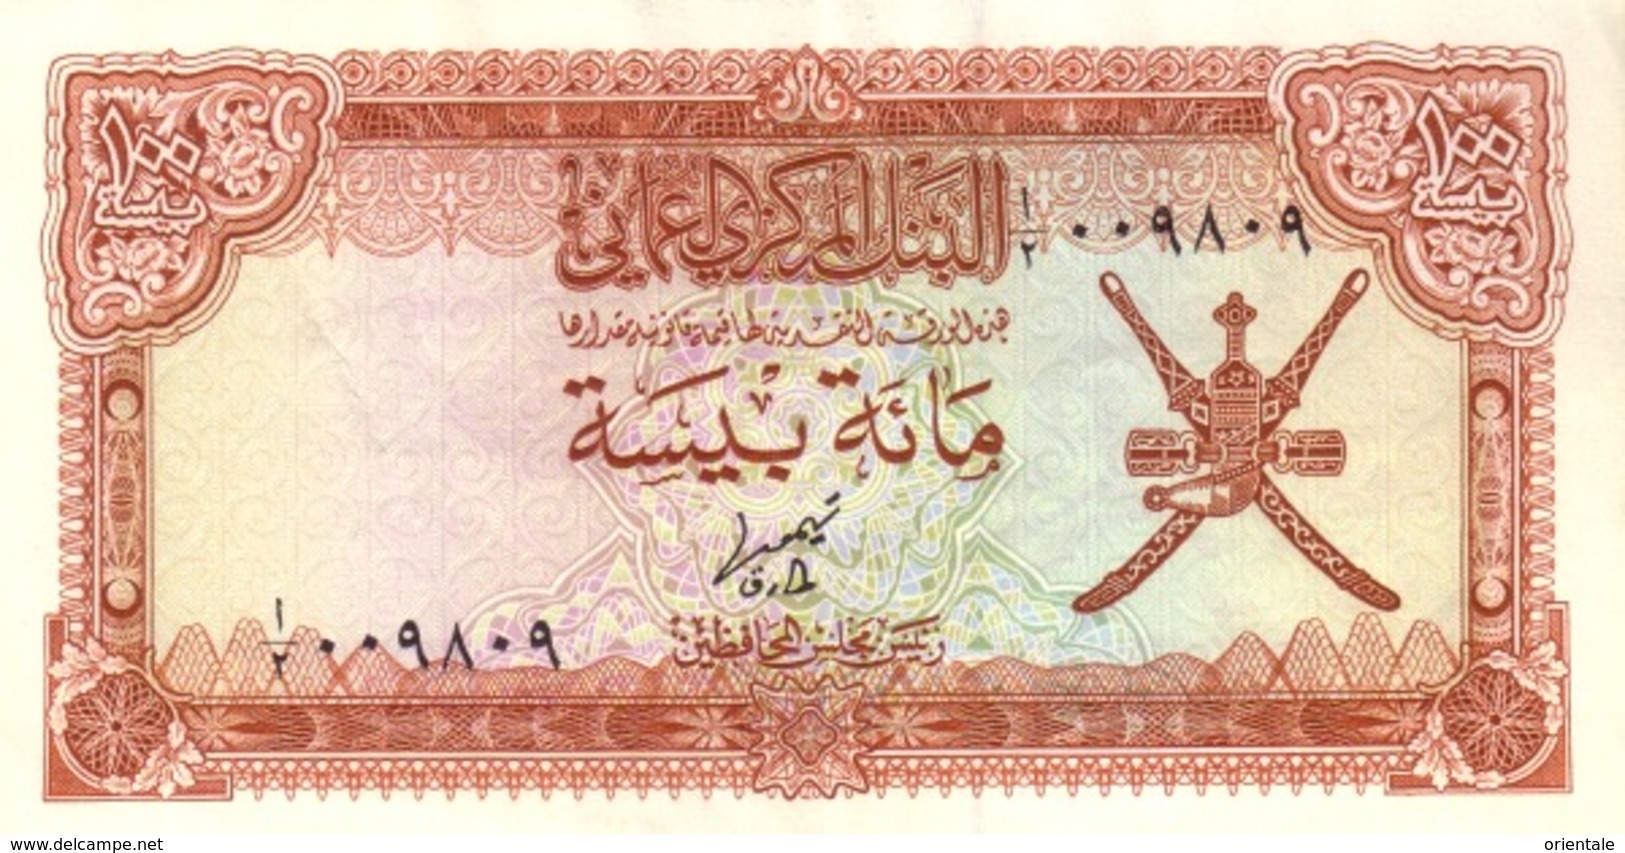 OMAN P. 13a 100 B 1977 UNC - Oman